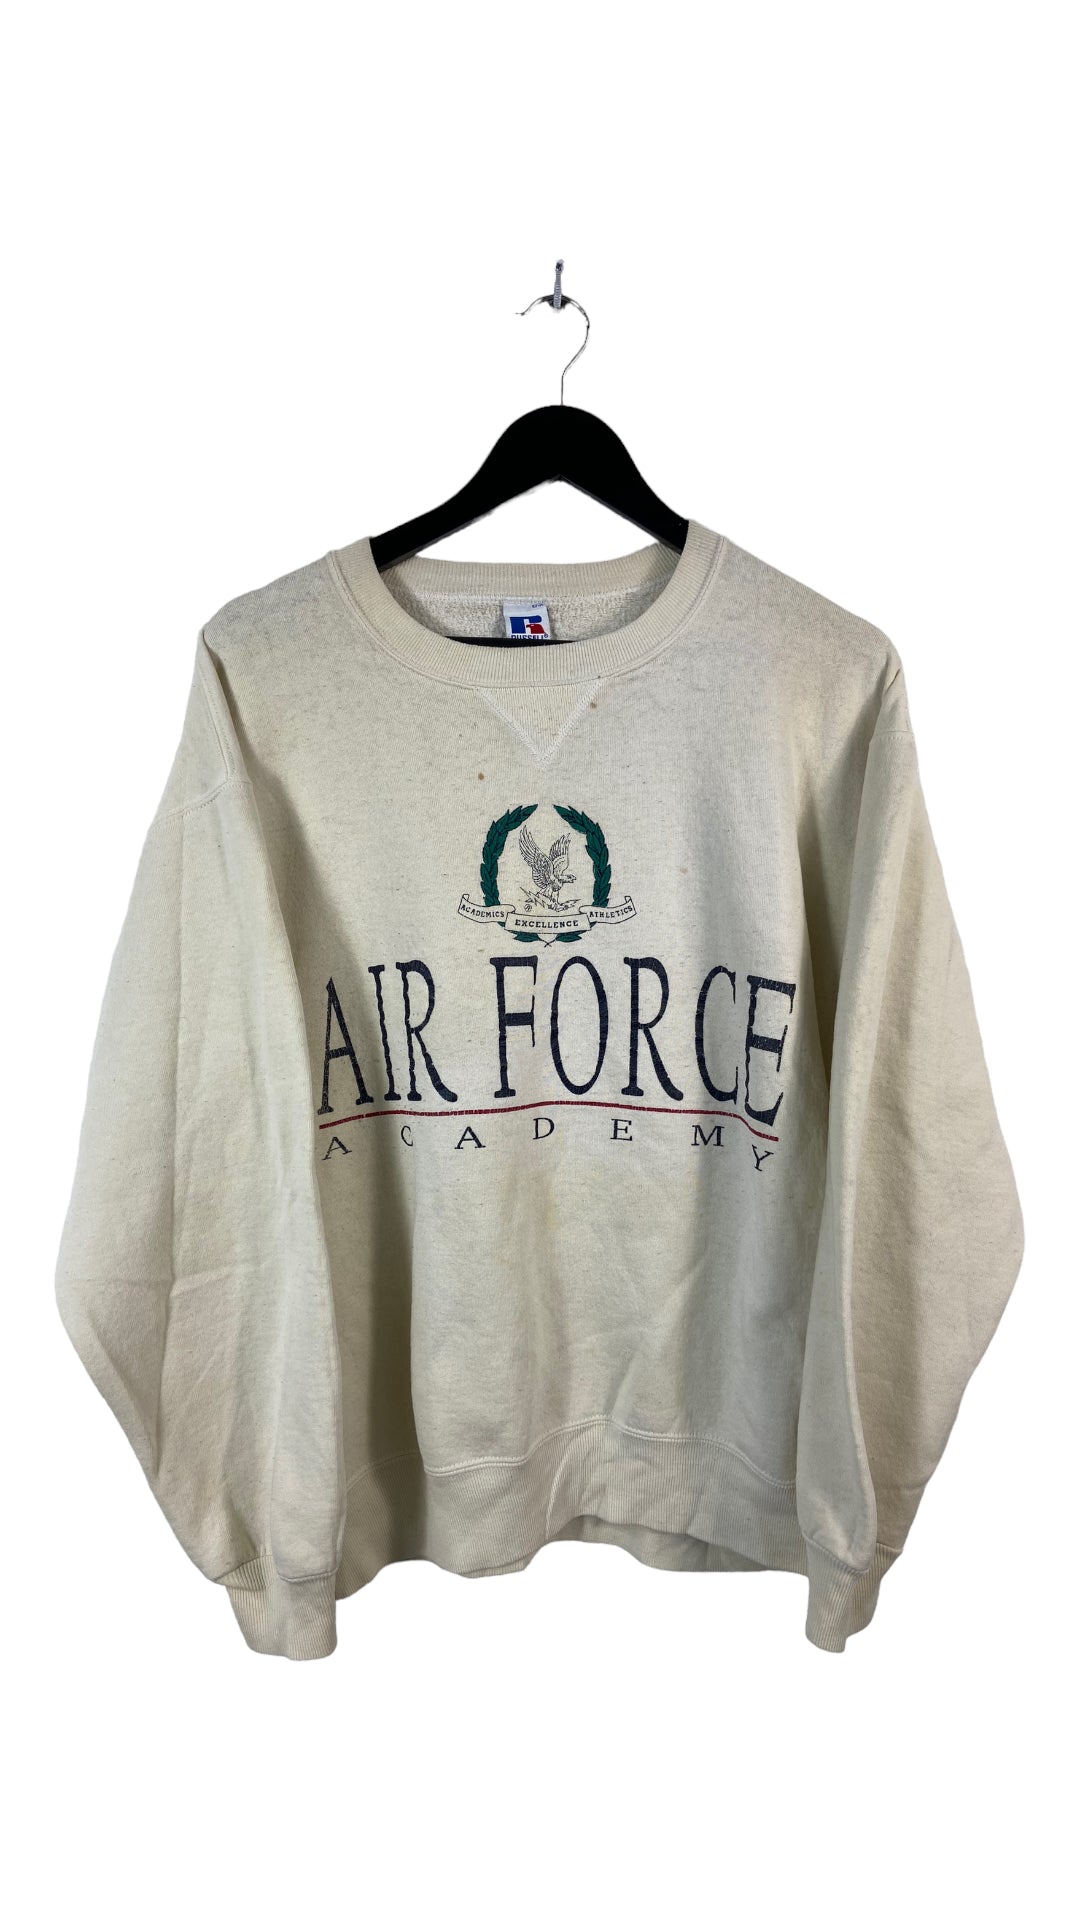 VTG Air Force Academy Russell Athletic Sweatshirt Sz XL